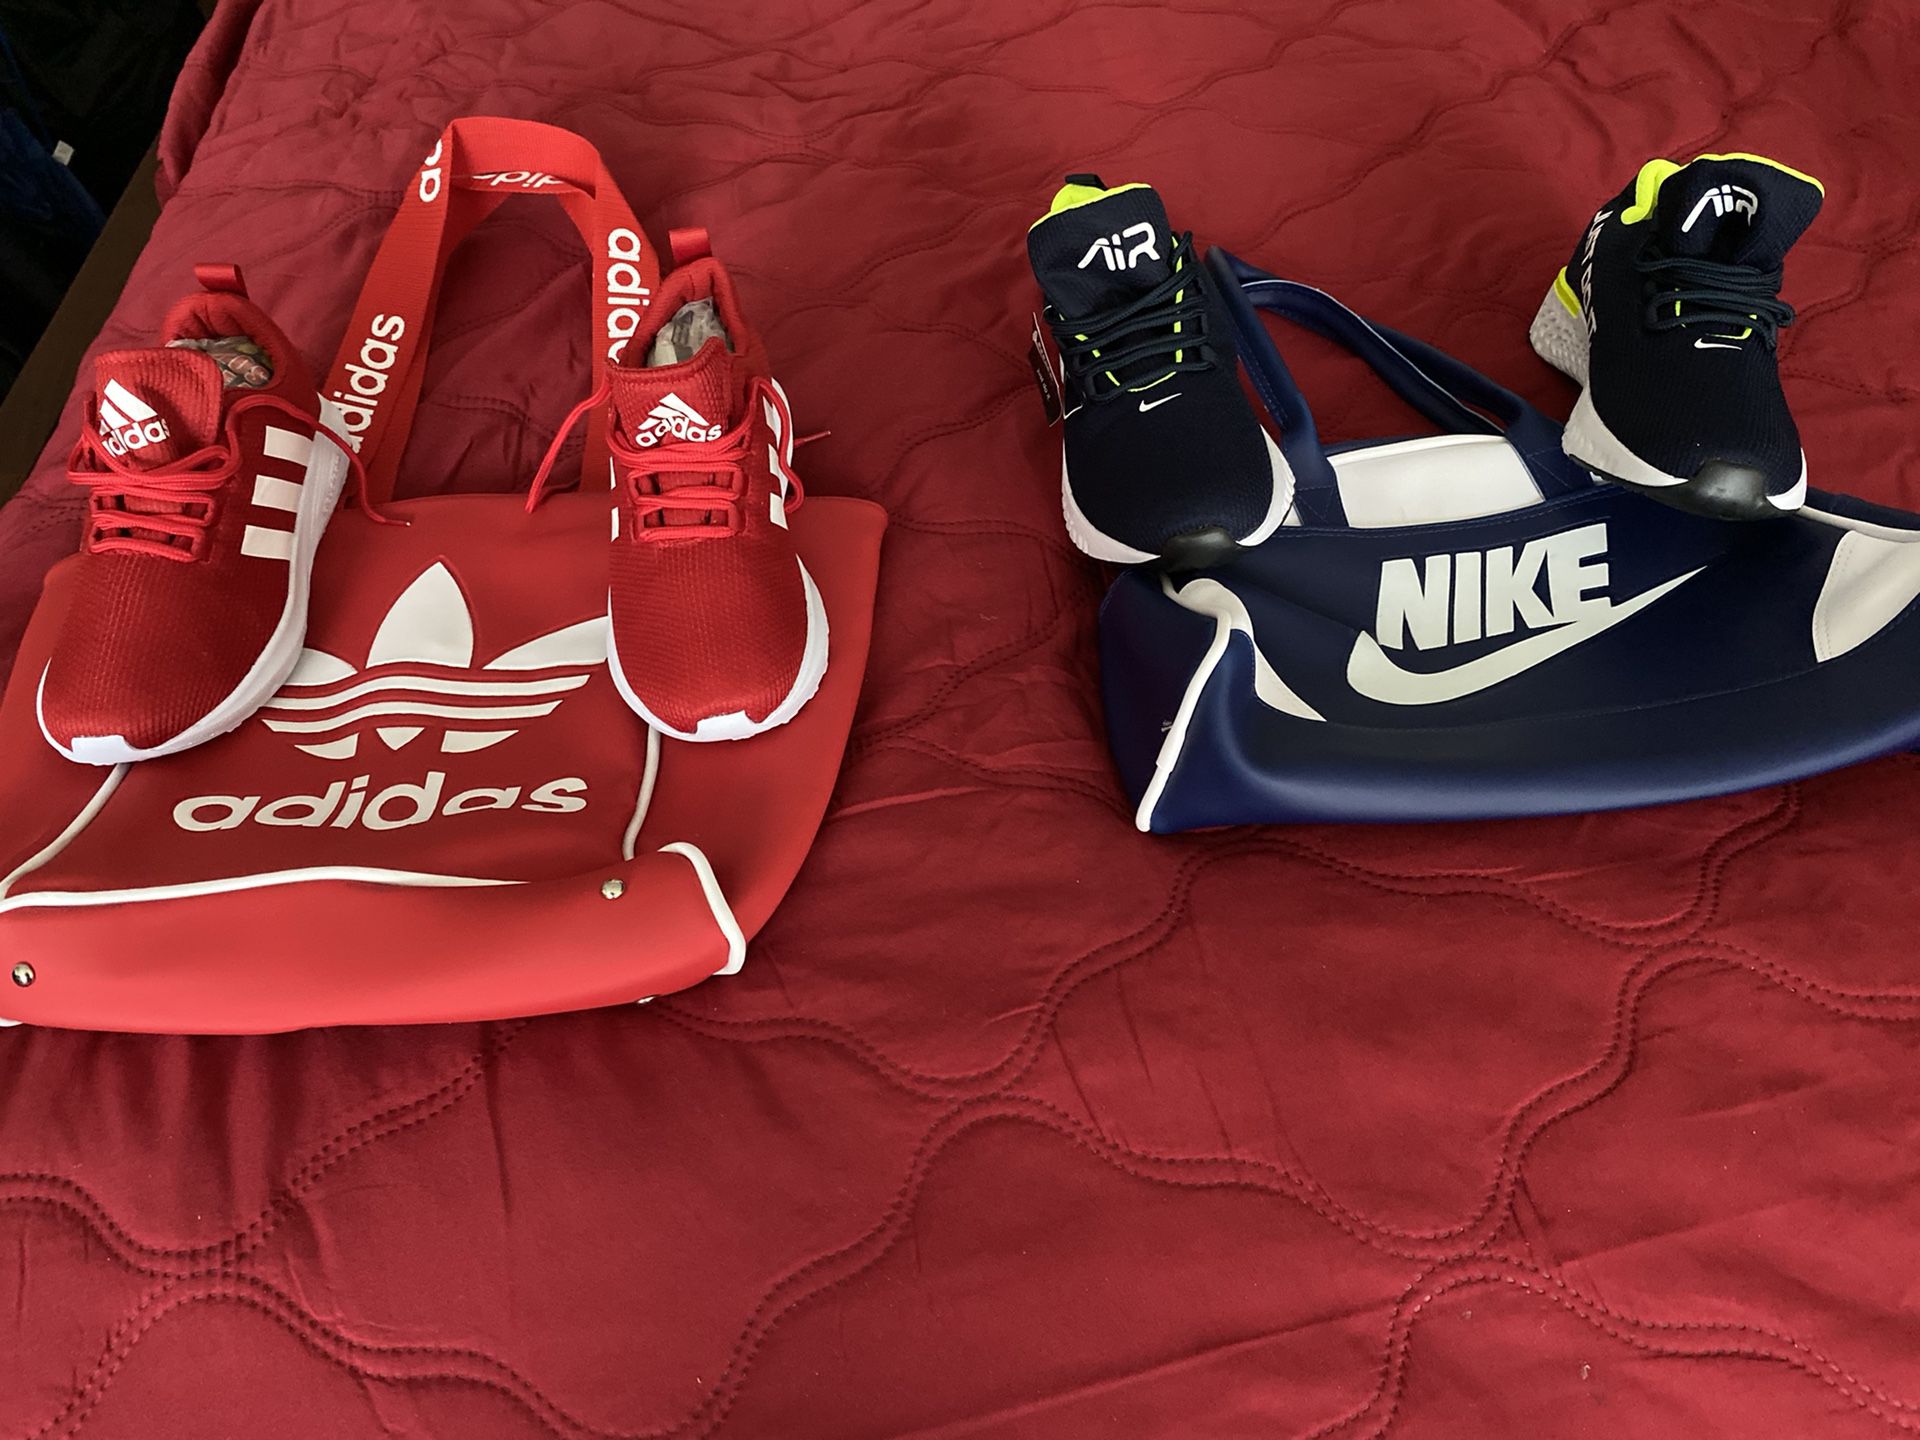 Adidas and Nike shoe & bag sets